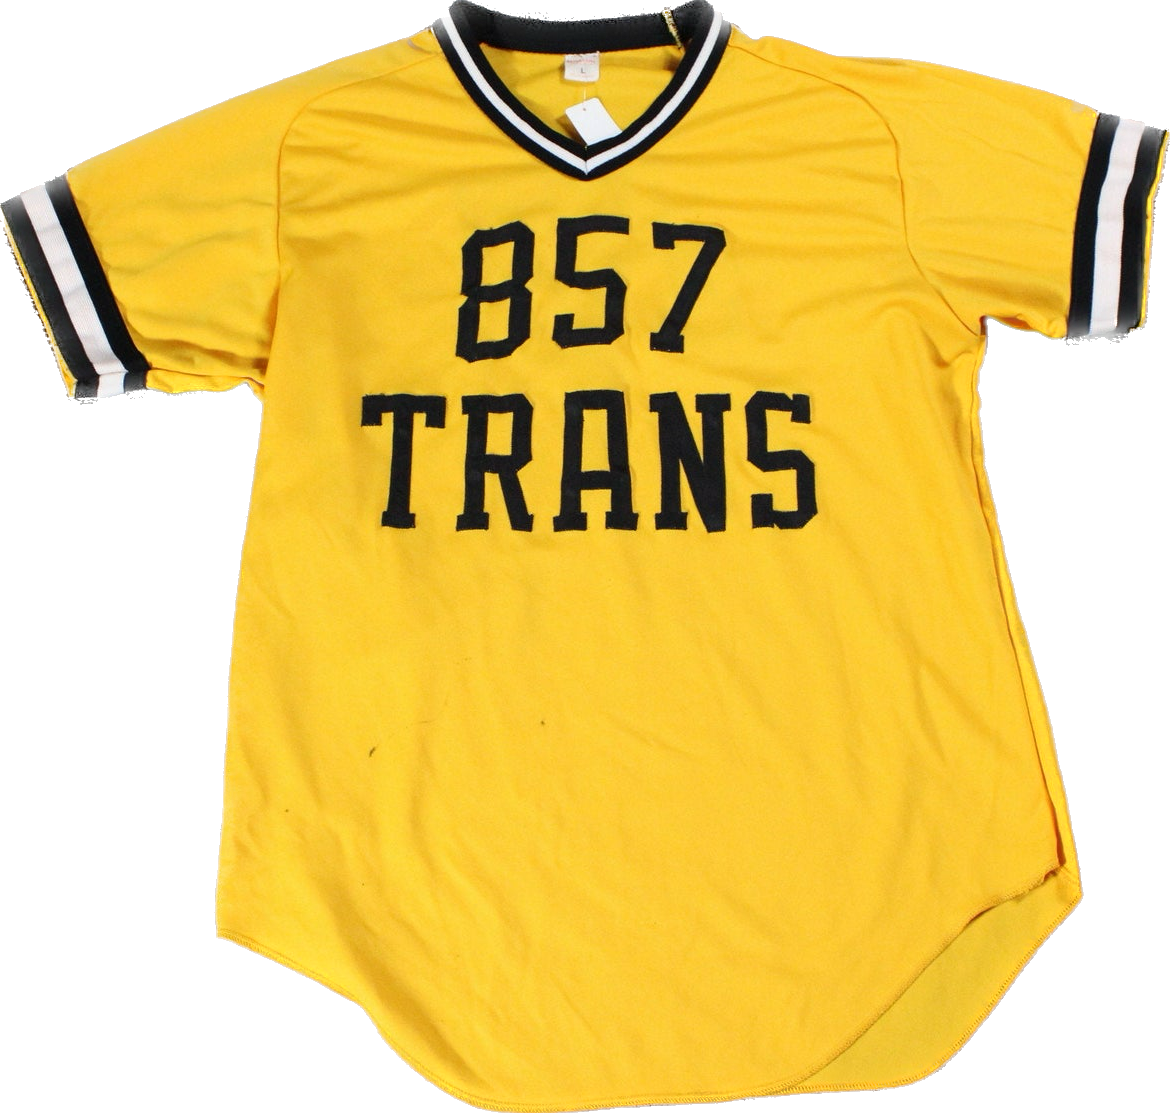 Wilson Hockey Jersey / Vintage Rayon / NHL Sports Player Uniform / TRANS / Yellow & Black